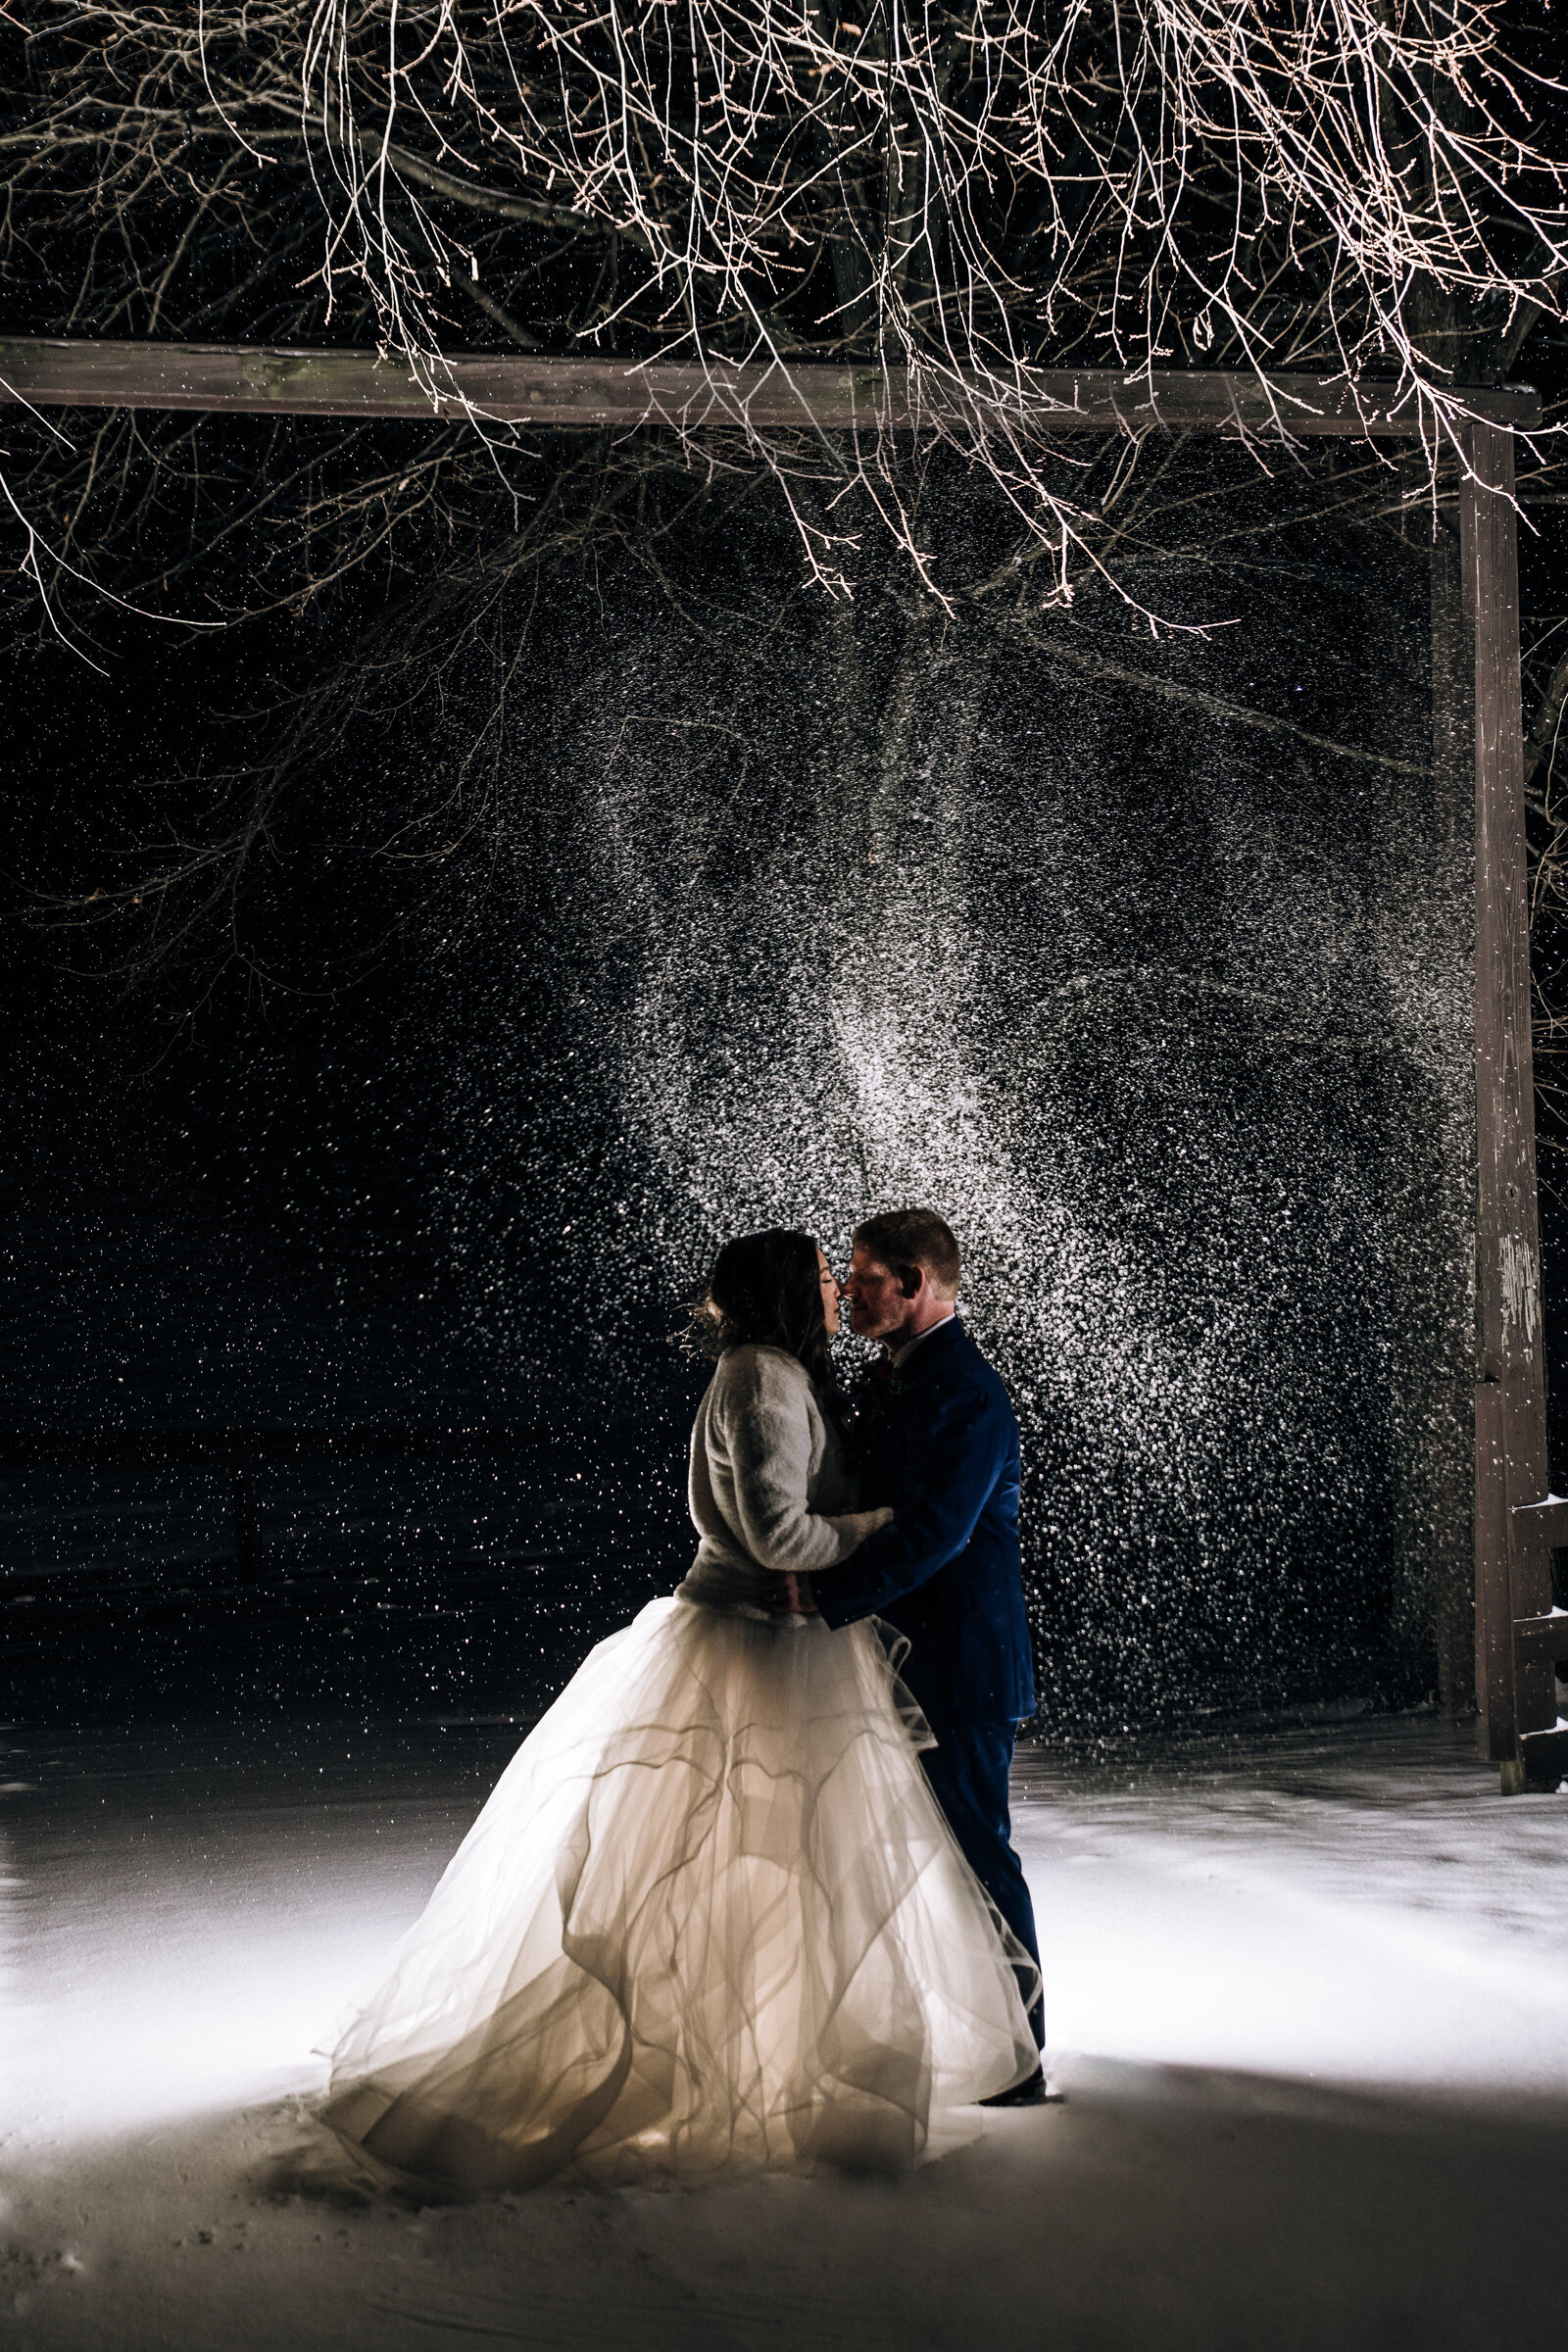 Snowy wedding photo at night at  a barn in Ohio